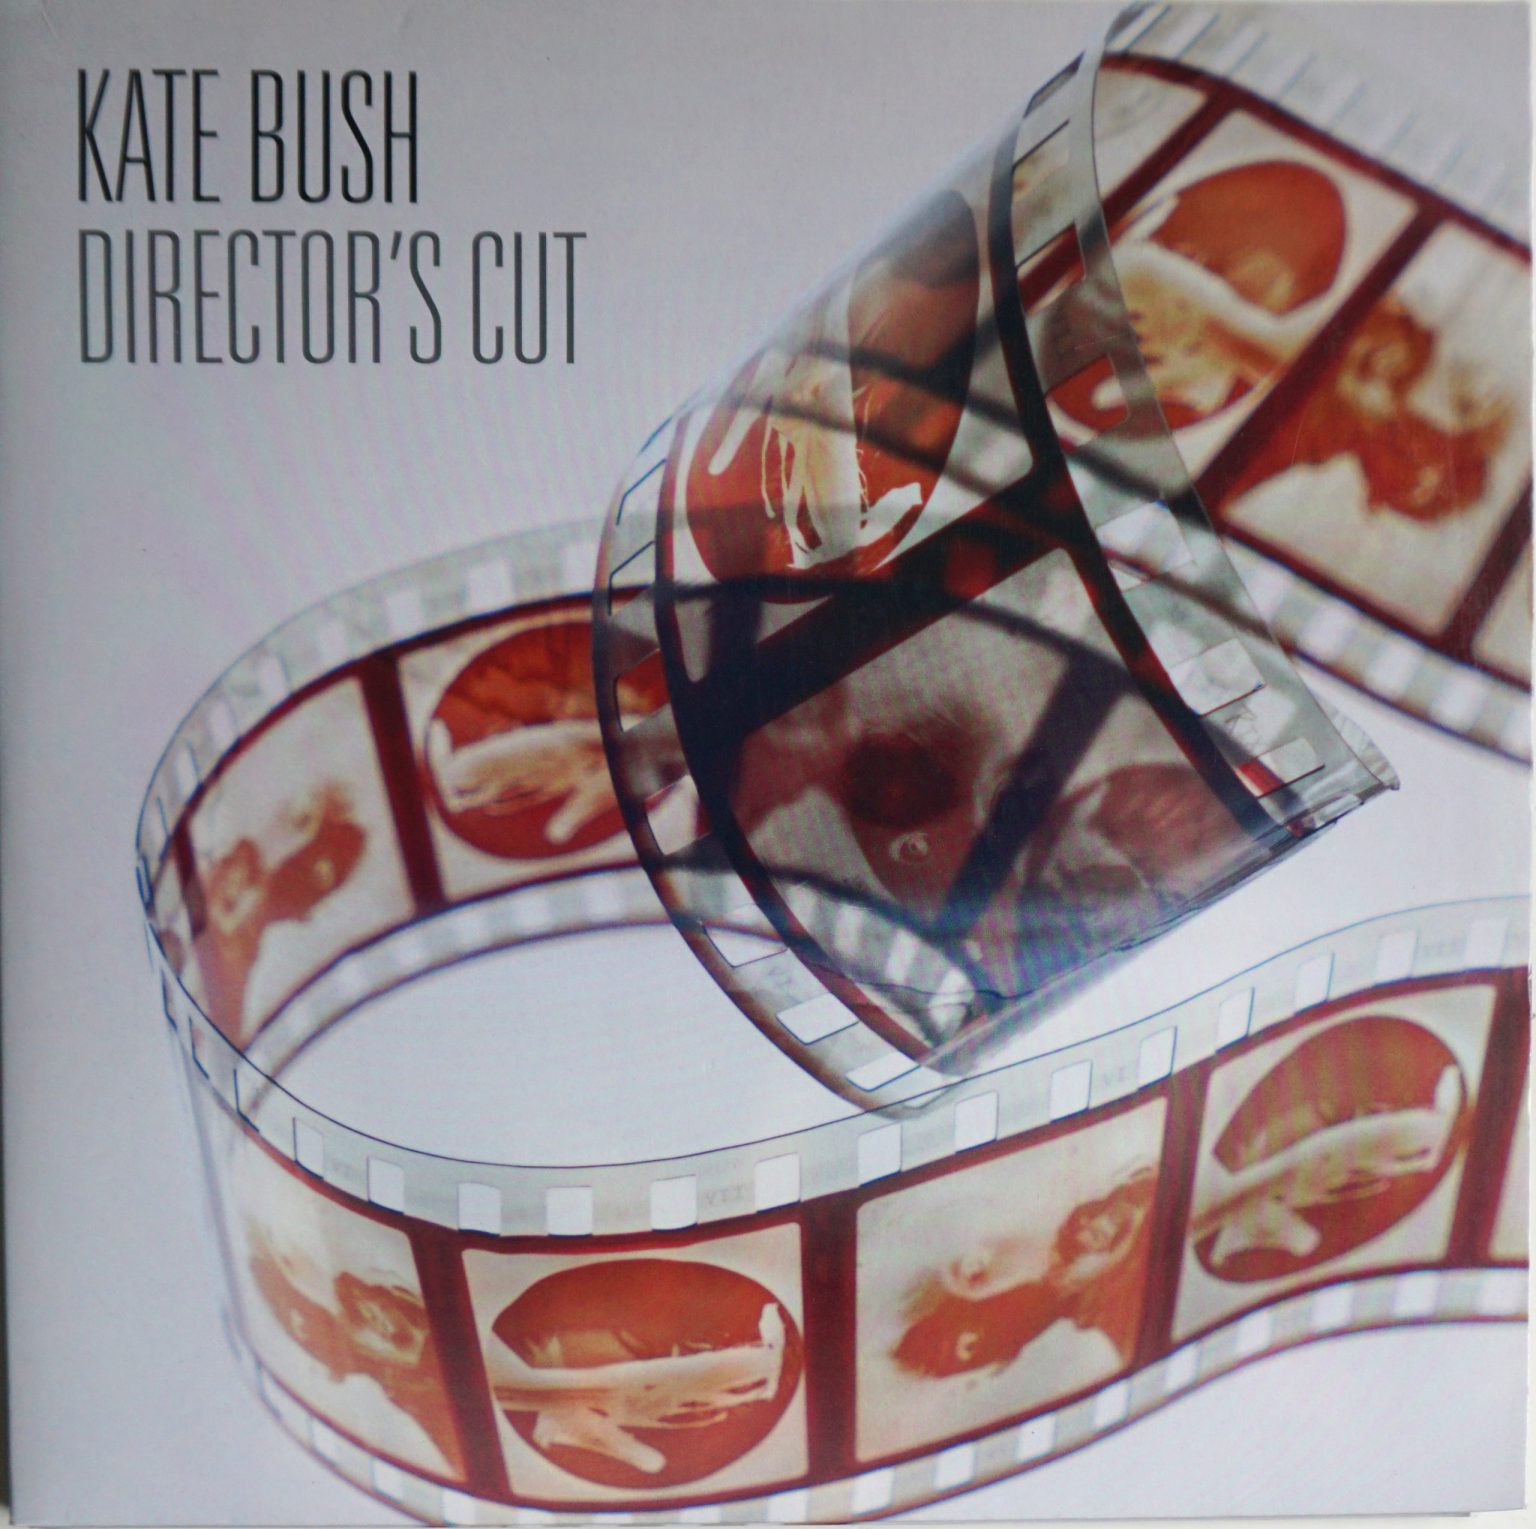 Kate Bush – Director’s cut [Vinyl 2LP] (VG+/VG+)